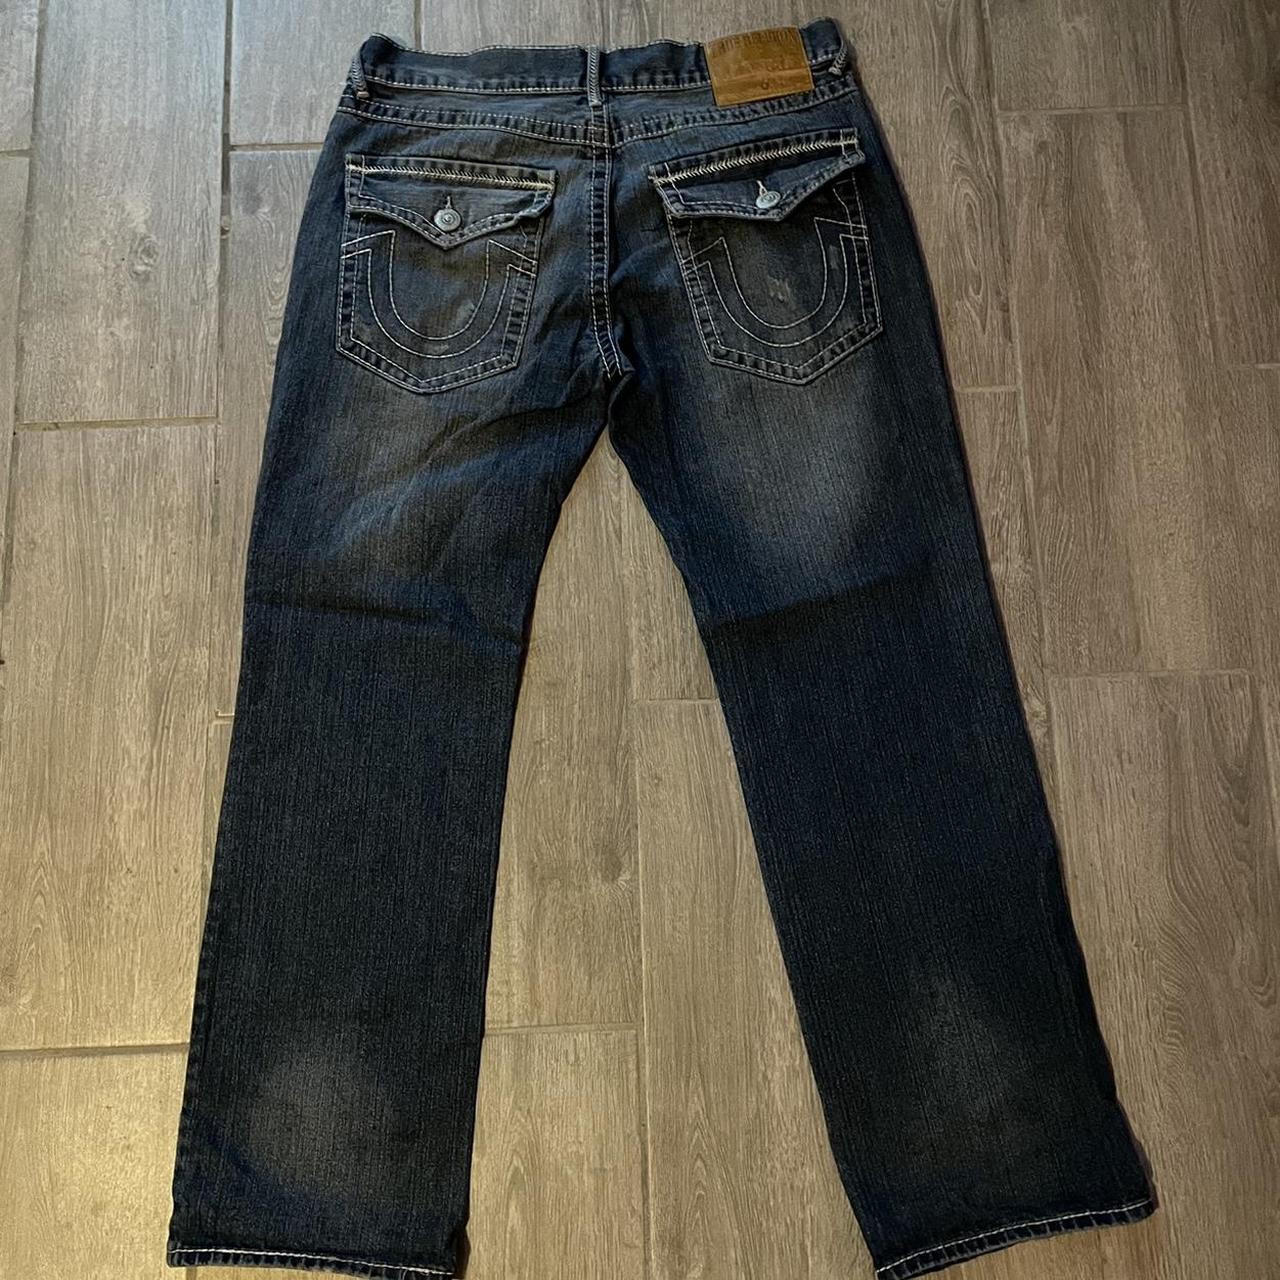 True religion vintage jeans Super tuff pair on... - Depop